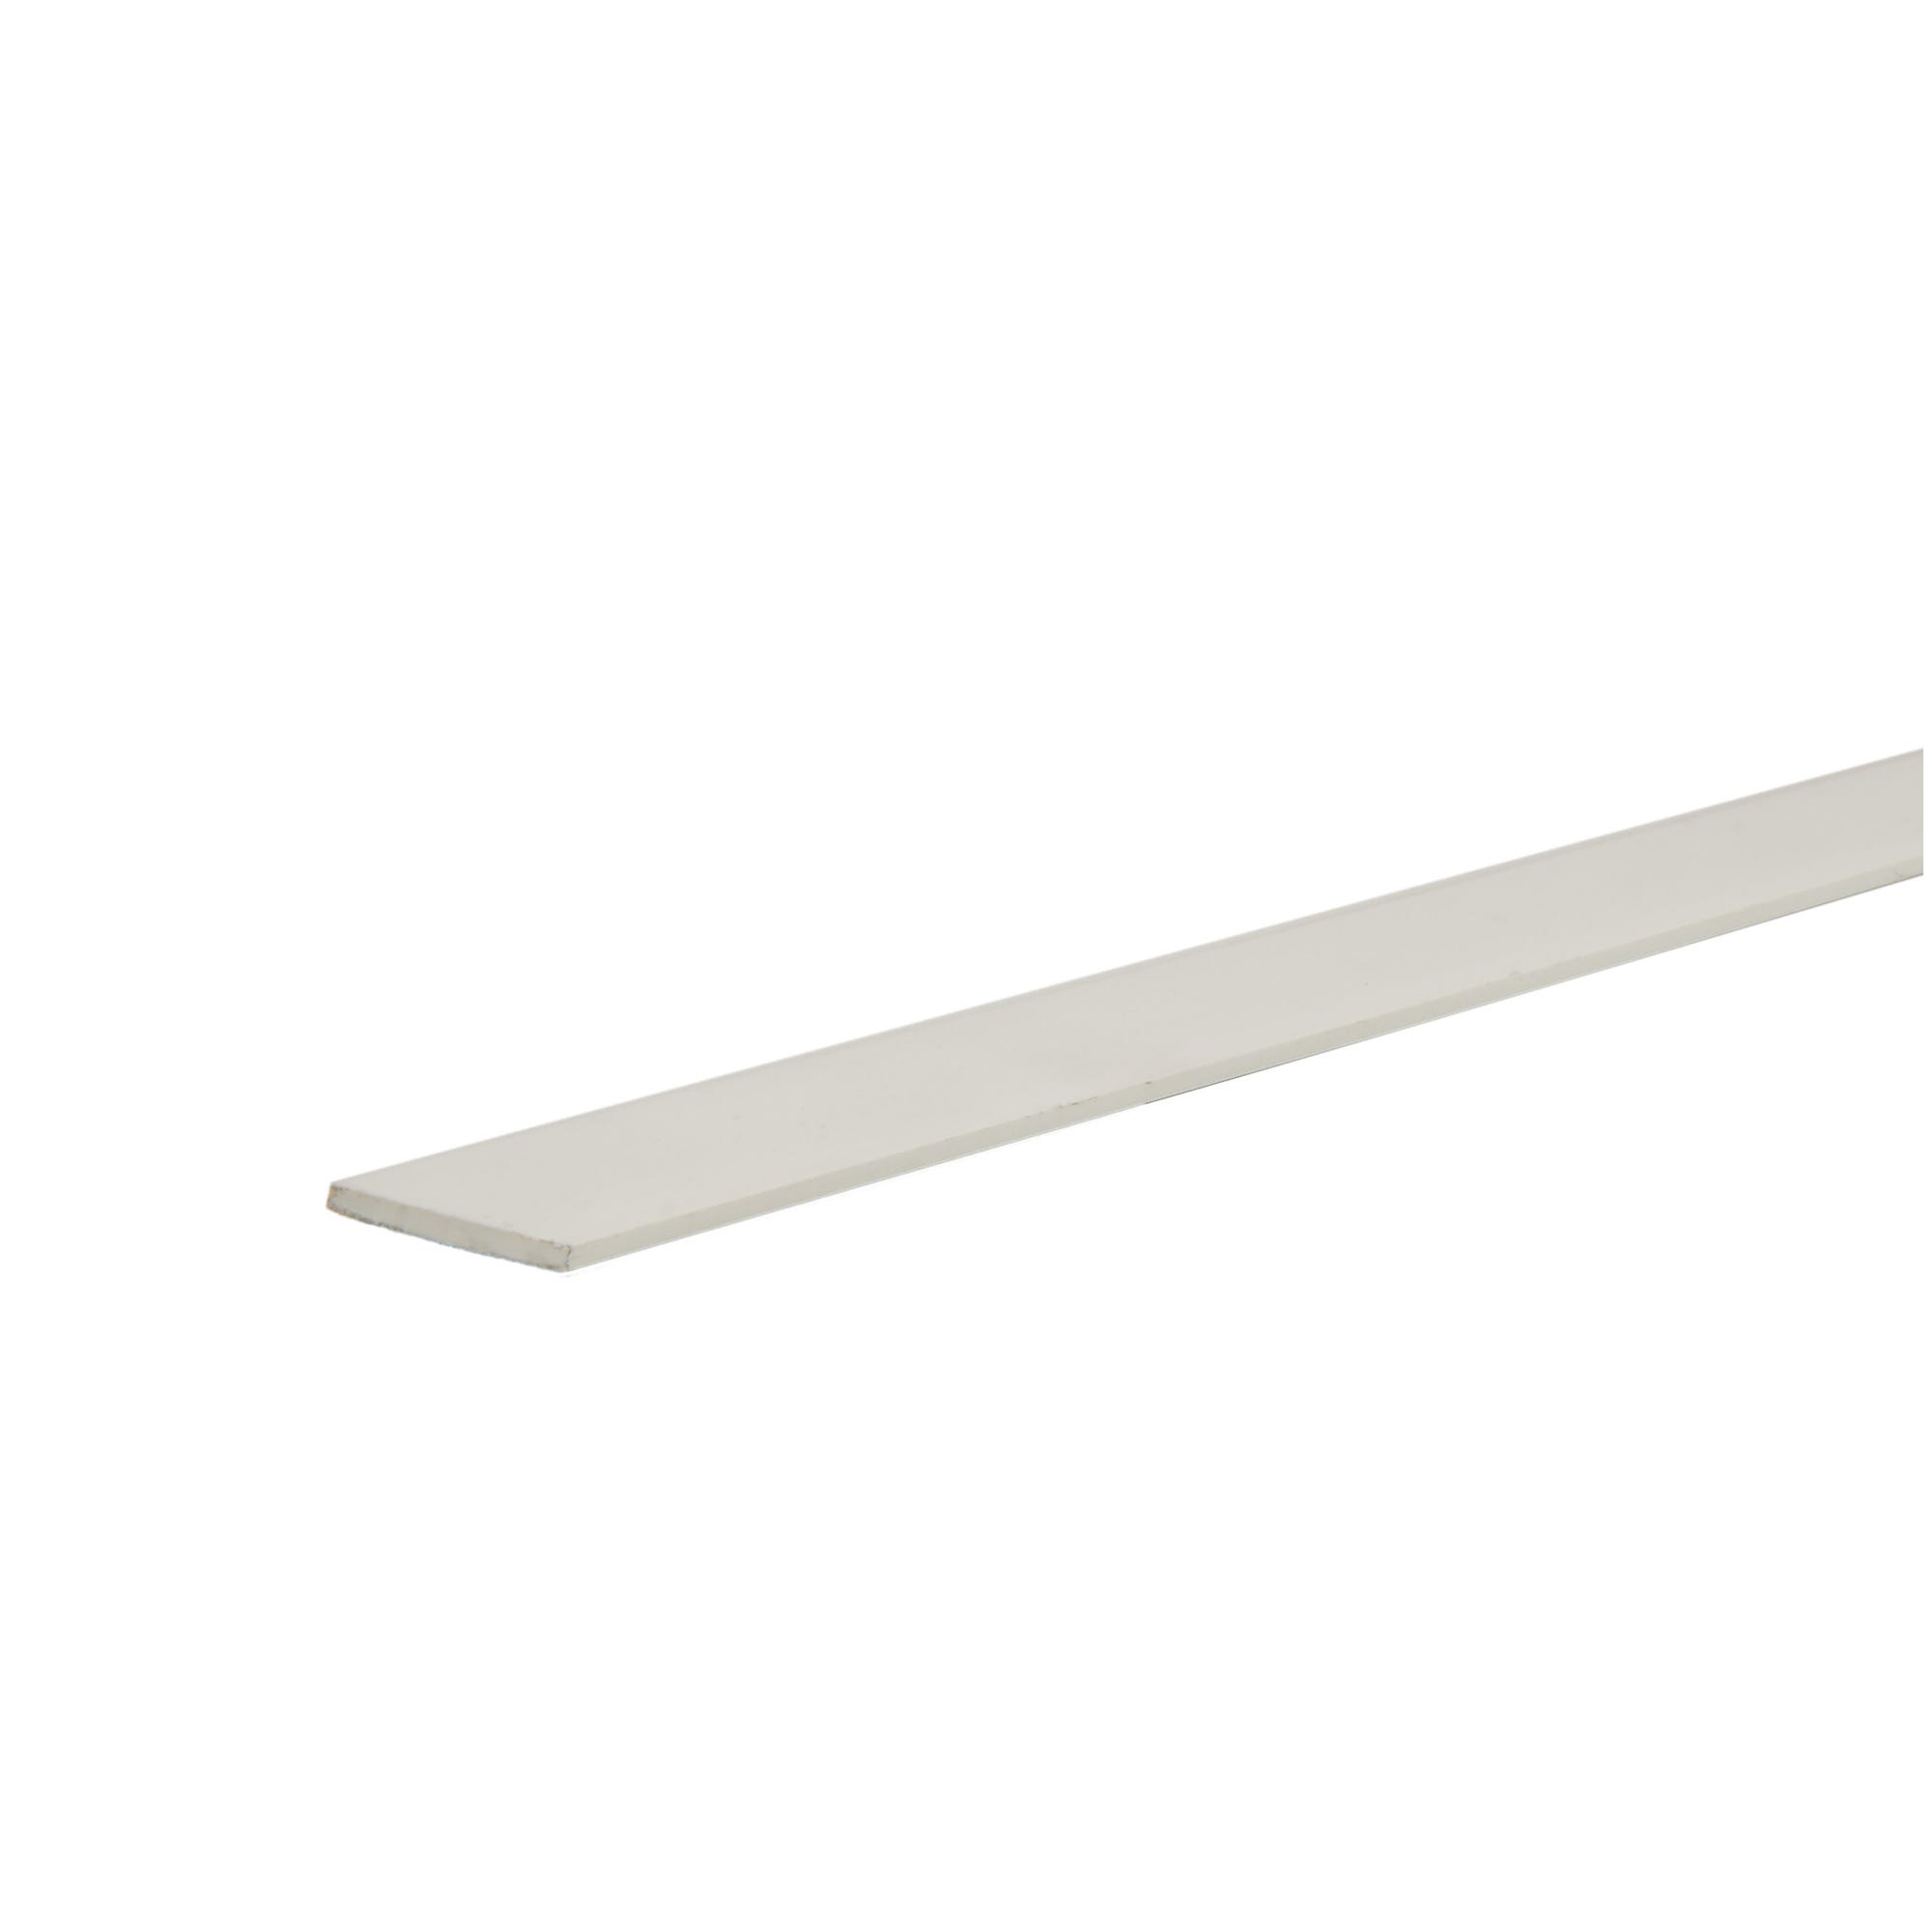 Champlat 2 angles vifs en PVC blanc 2 x 50 mm Long.2,6 m - SOTRINBOIS 0